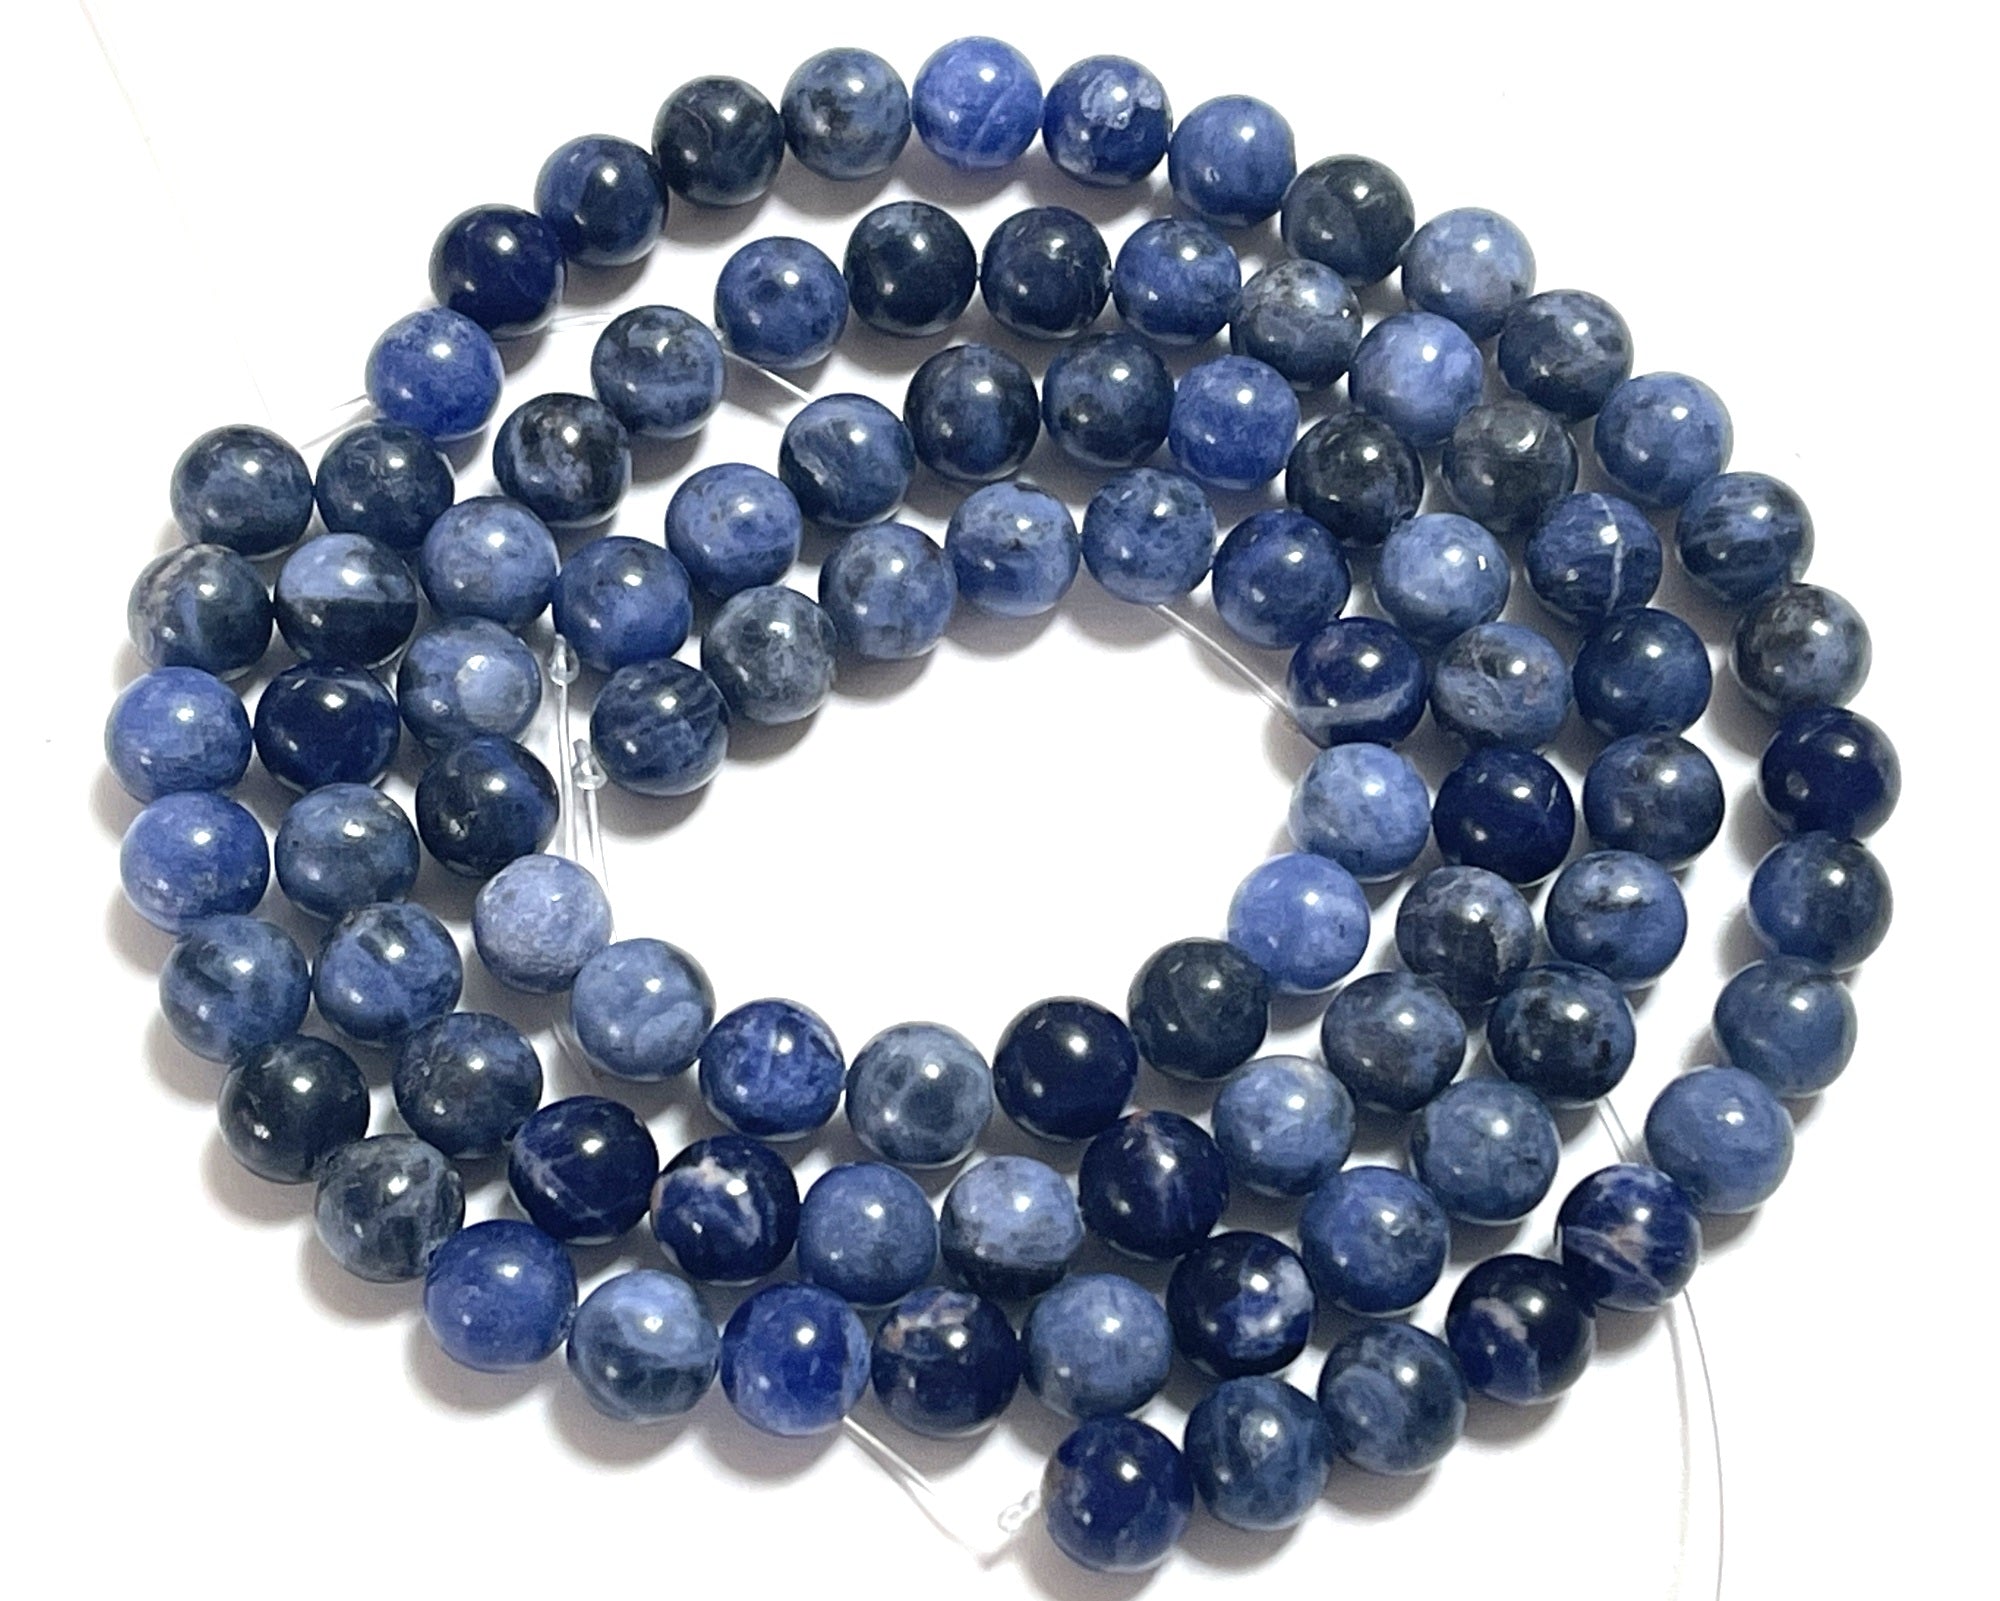 Blue Sodalite 8mm round polished natural gemstone beads 15" strand